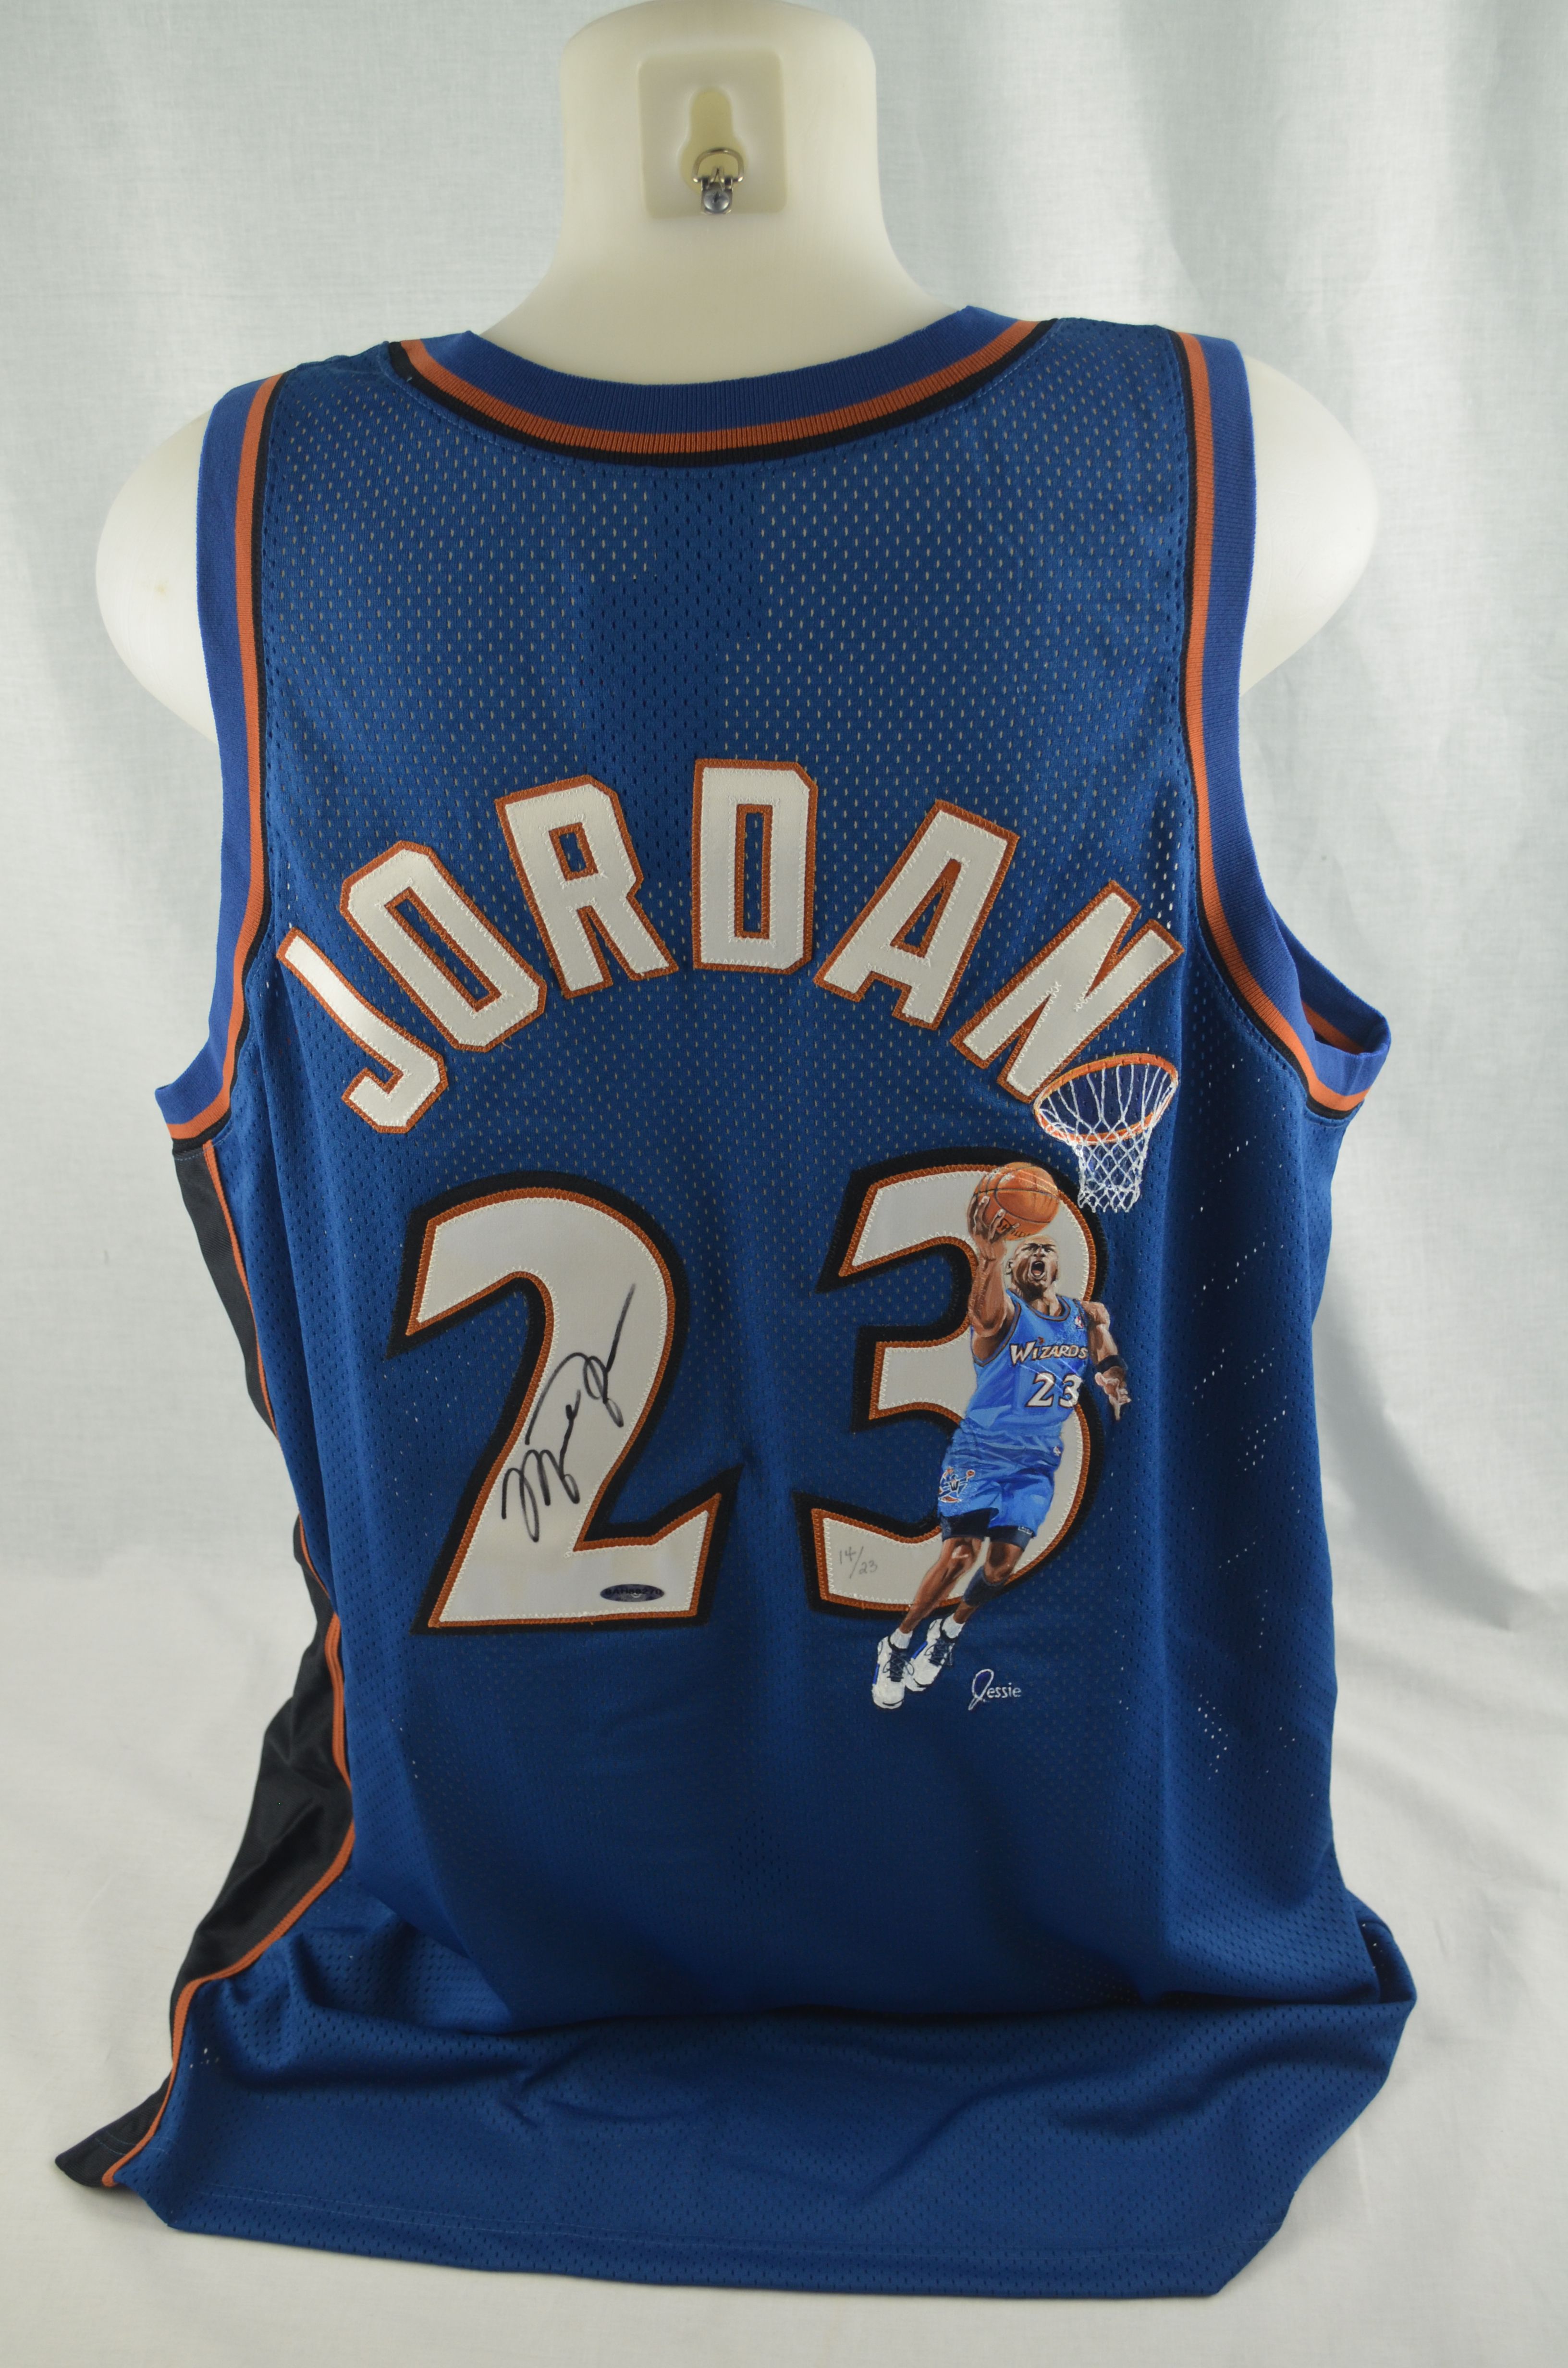 Autographed Washington Wizards Michael Jordan Upper Deck Jersey